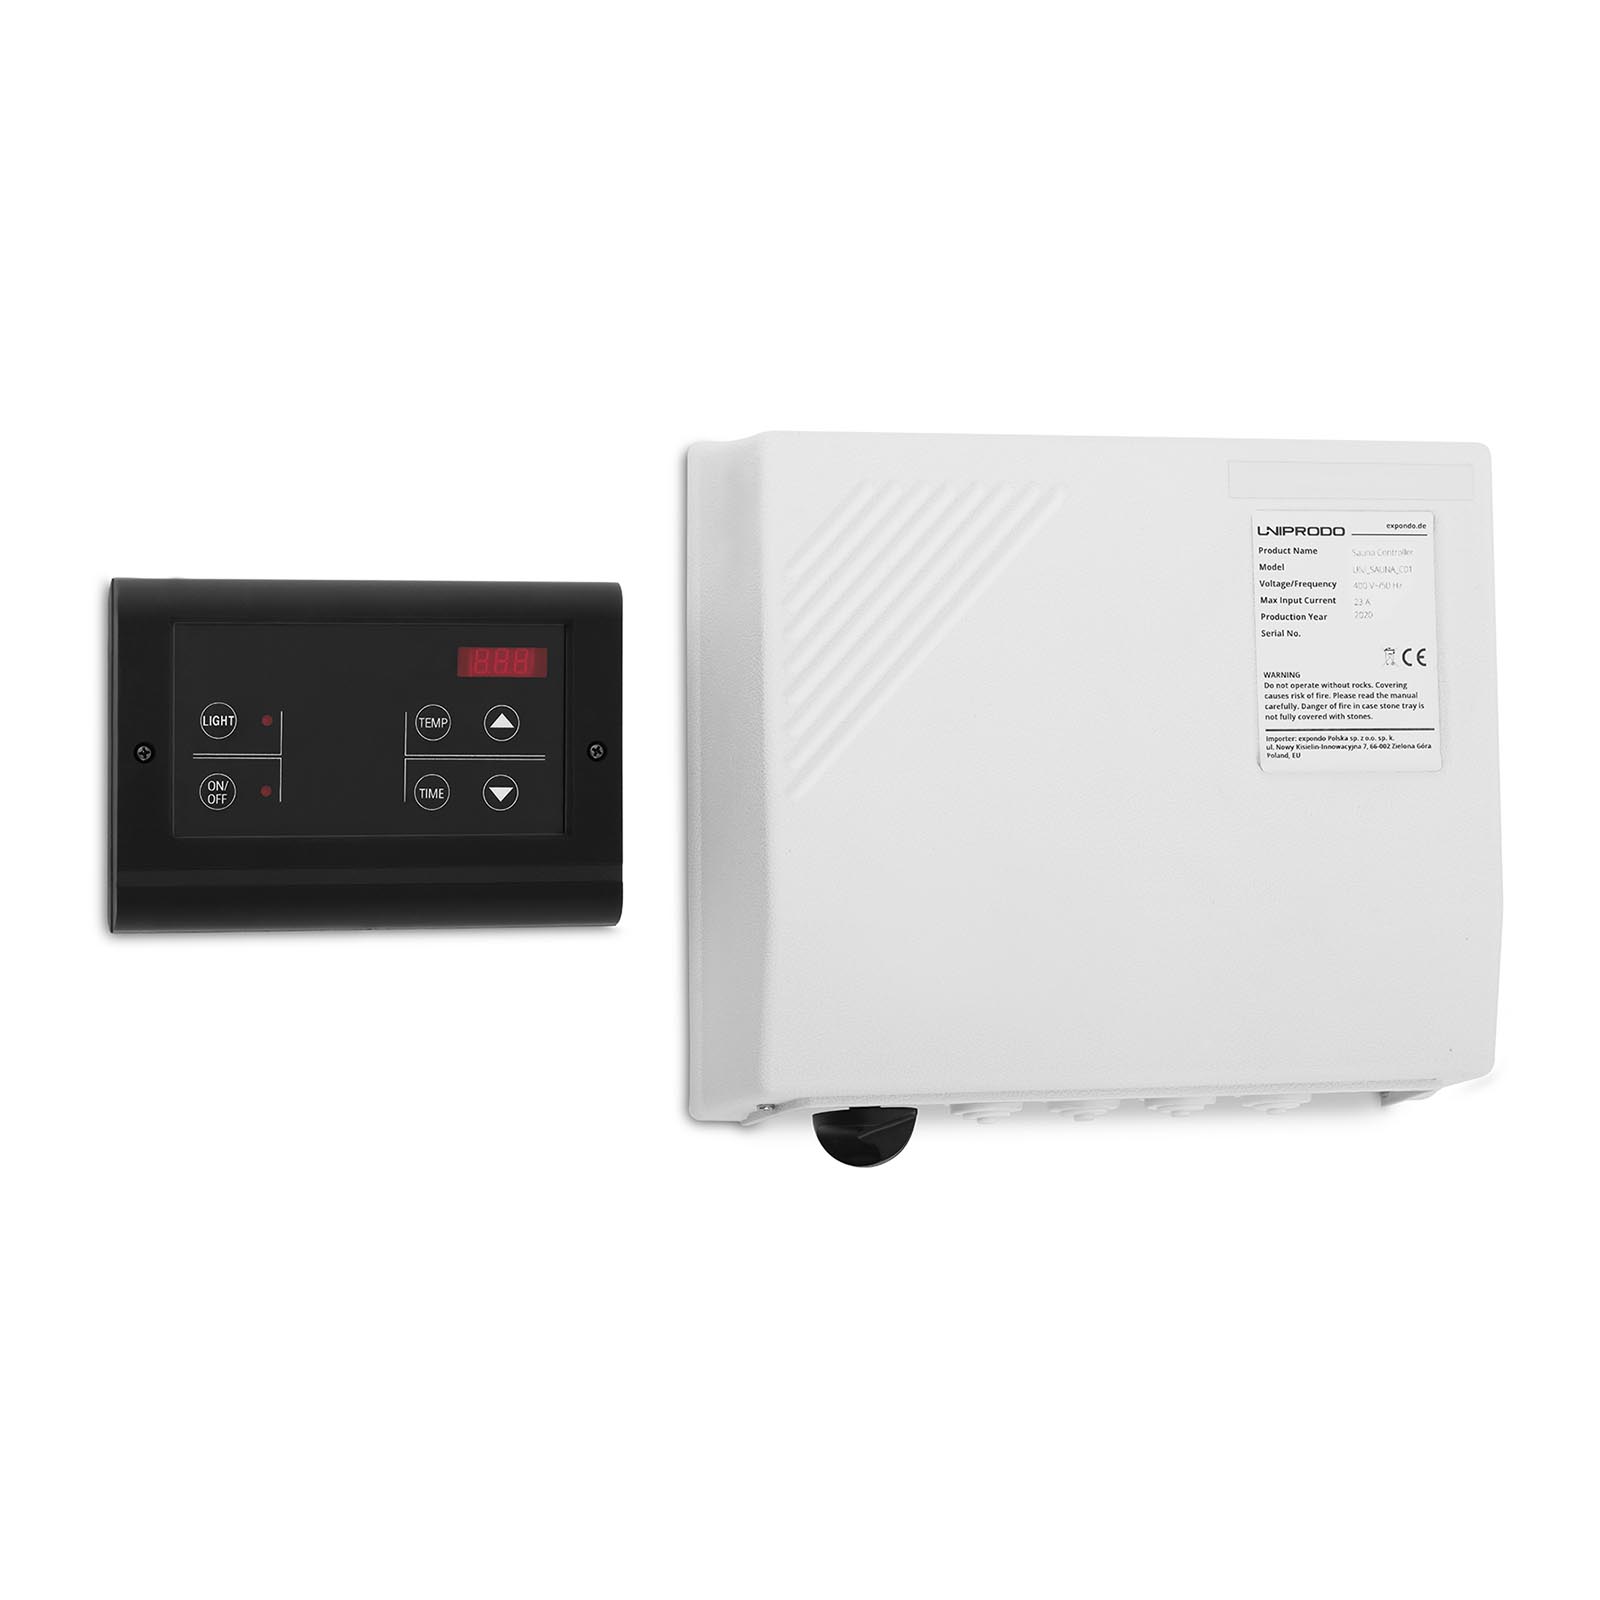 Set Sauna Heater with Sauna Control Panel - 9 kW - cylindrical - 30 to 110 °C